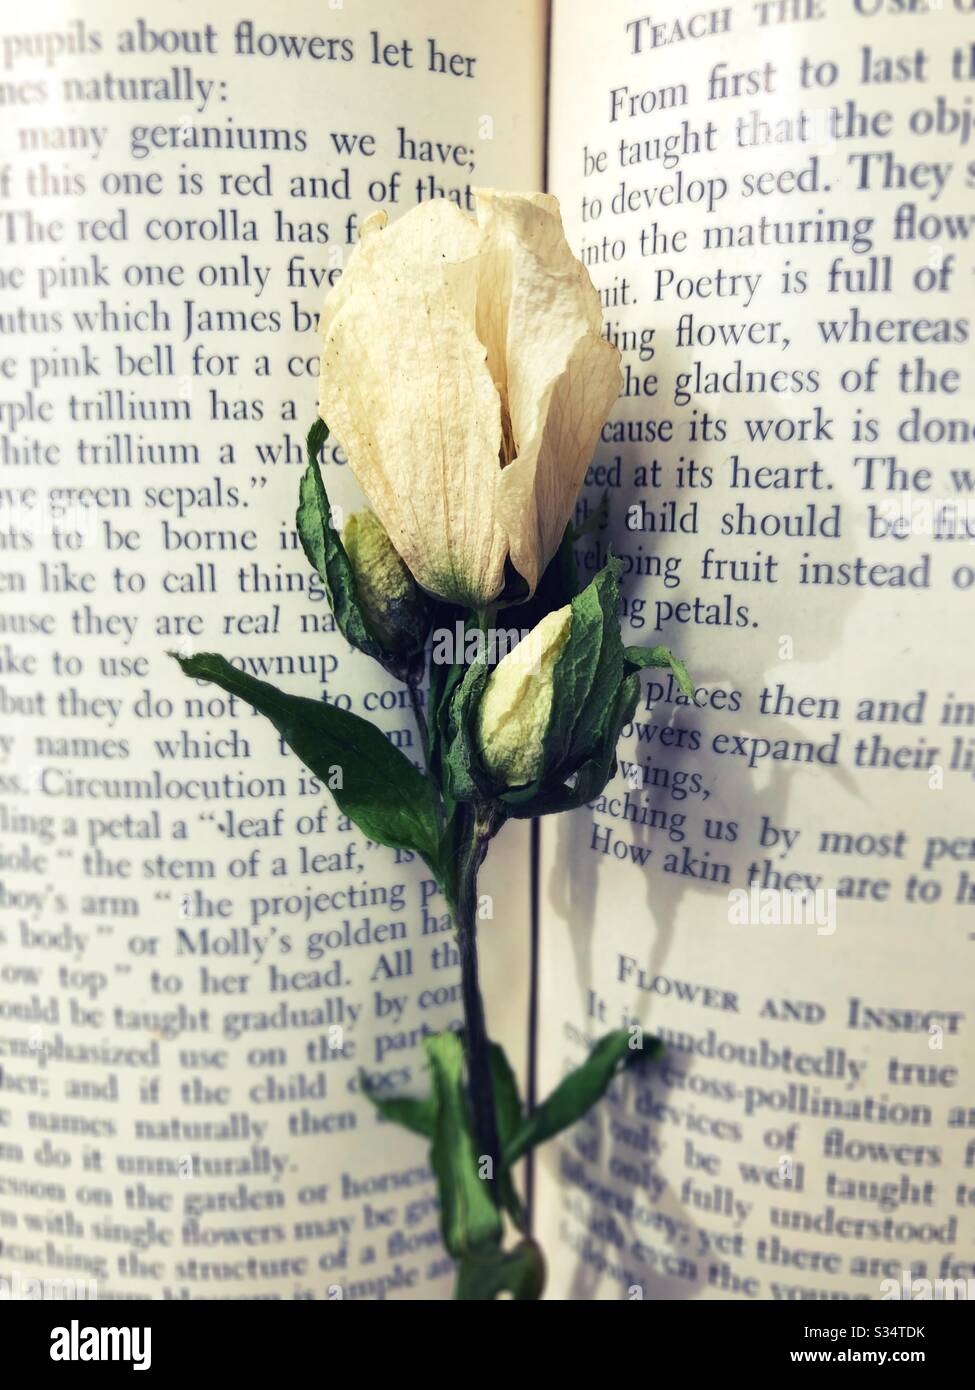 Una flor seca en un libro sobre flores. Foto de stock